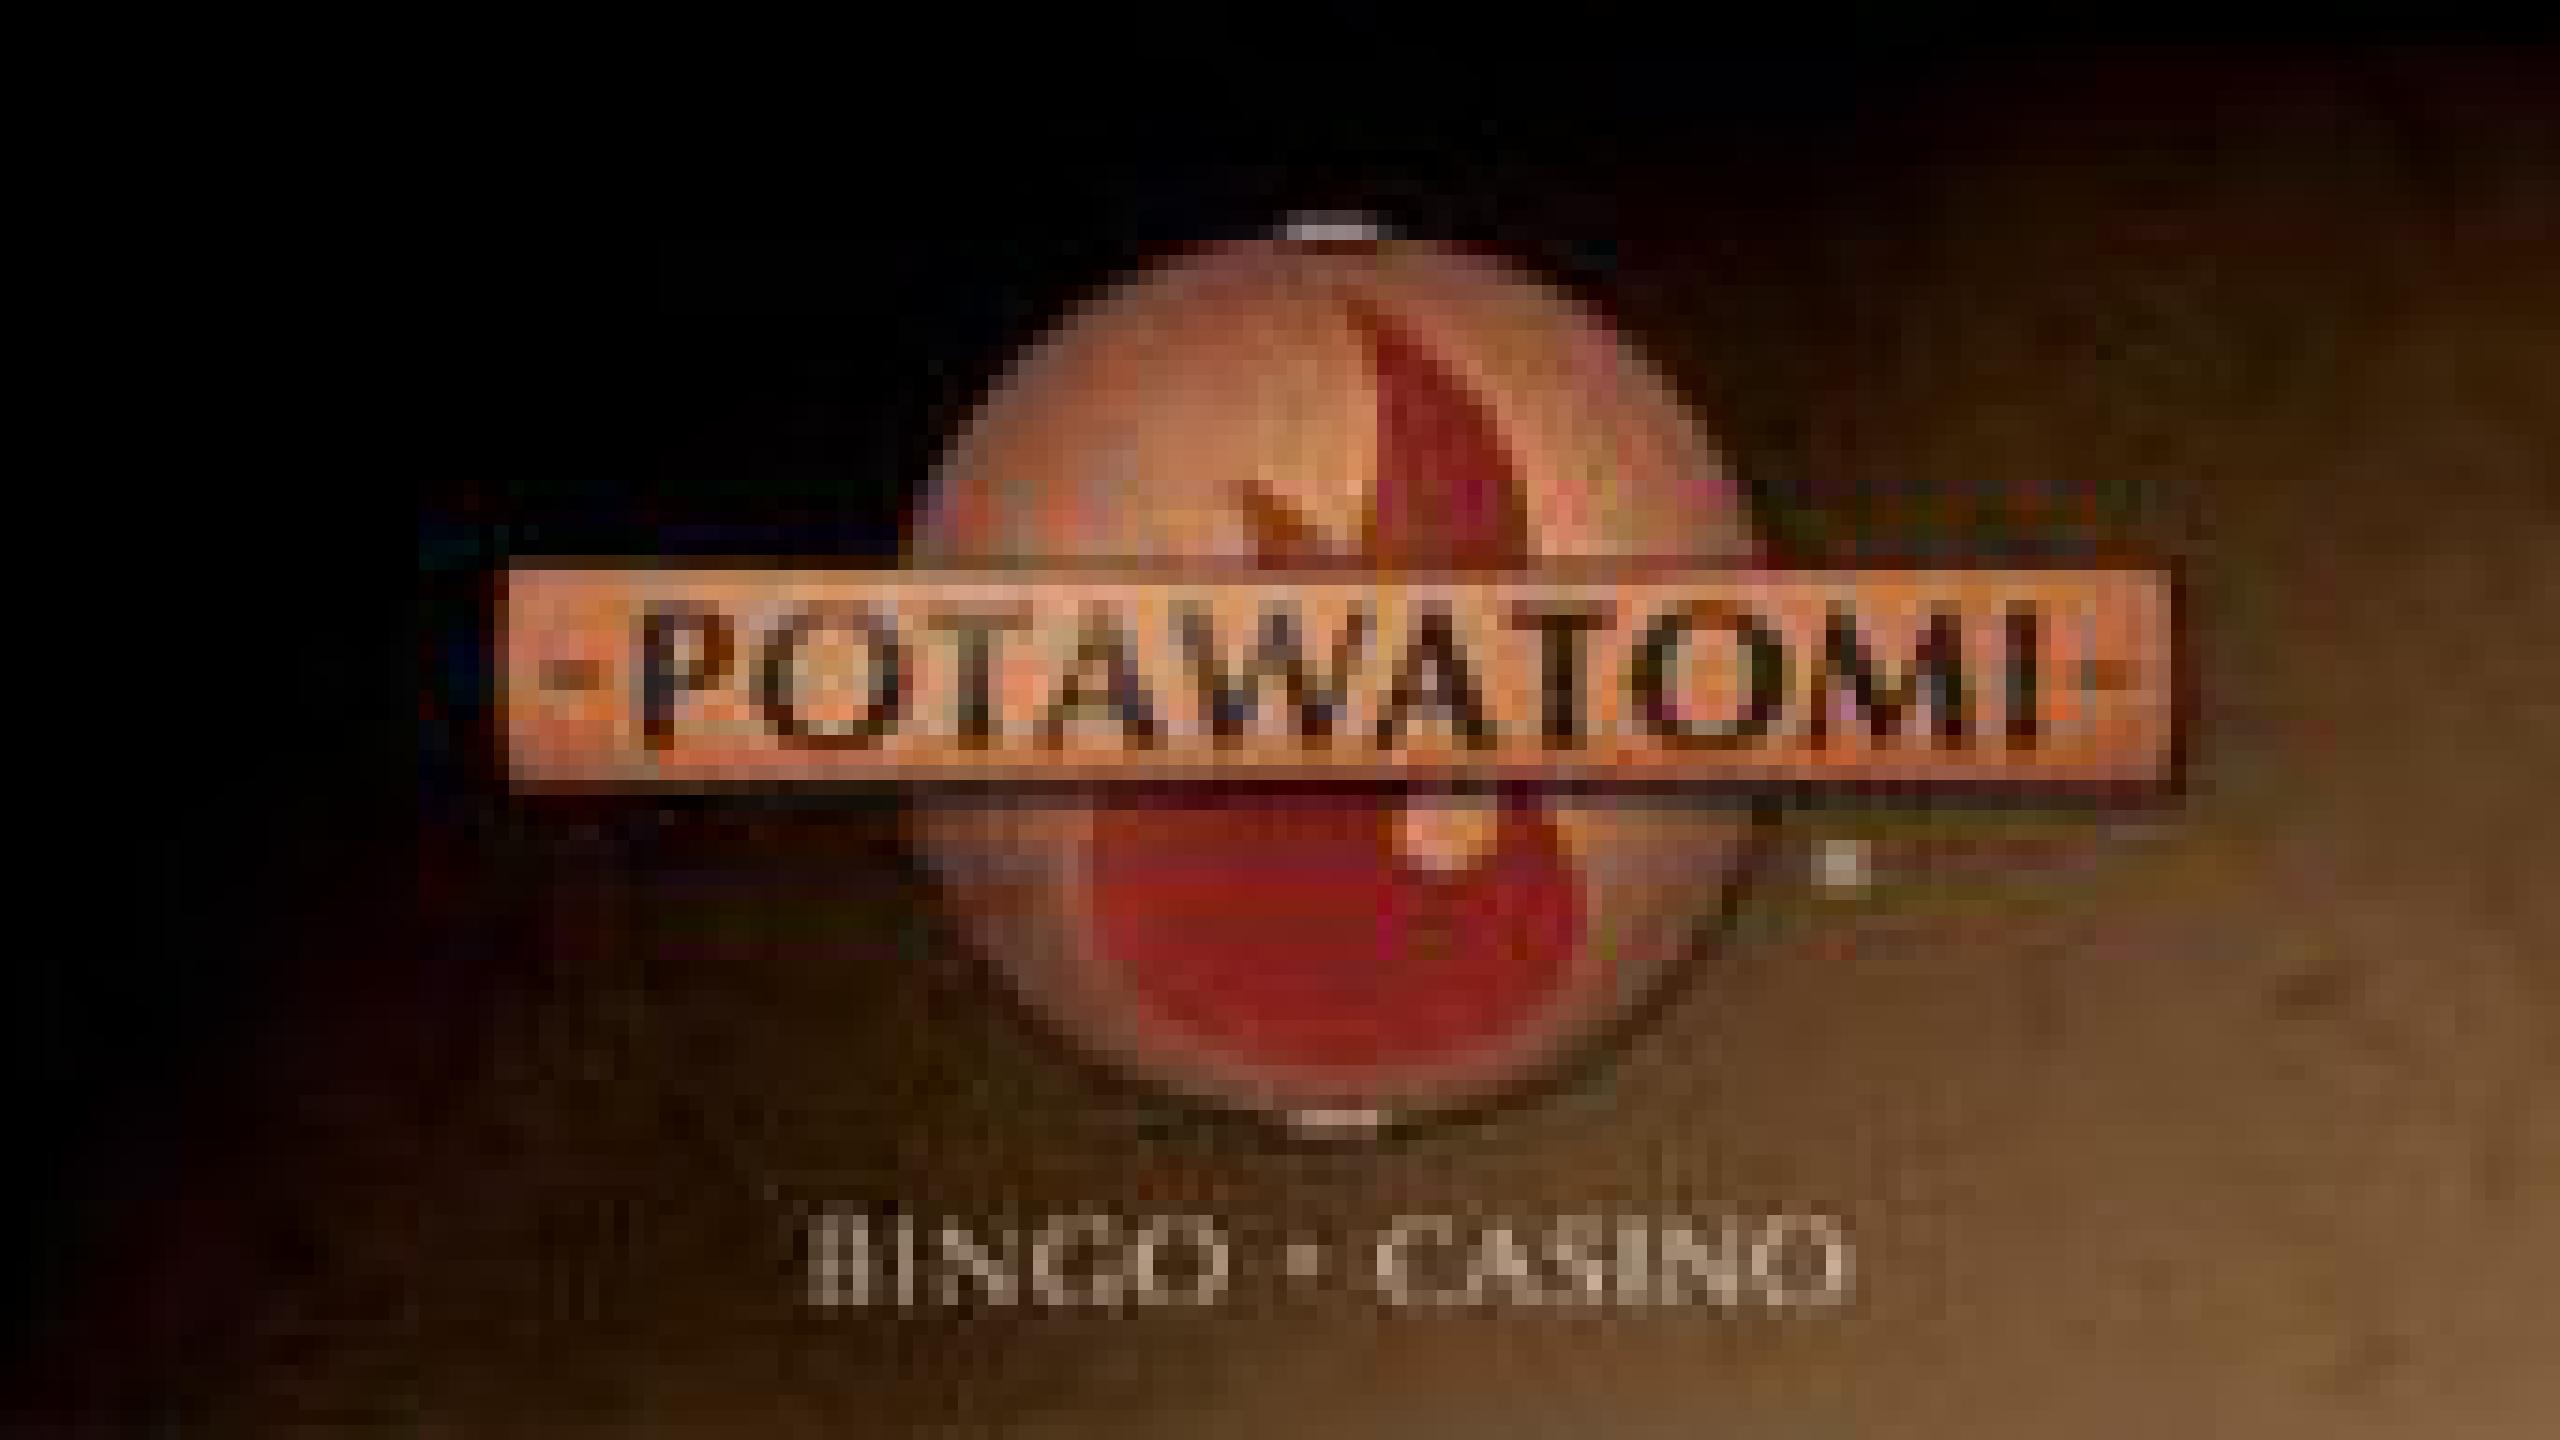 potawatomi northern lights bingo and casino